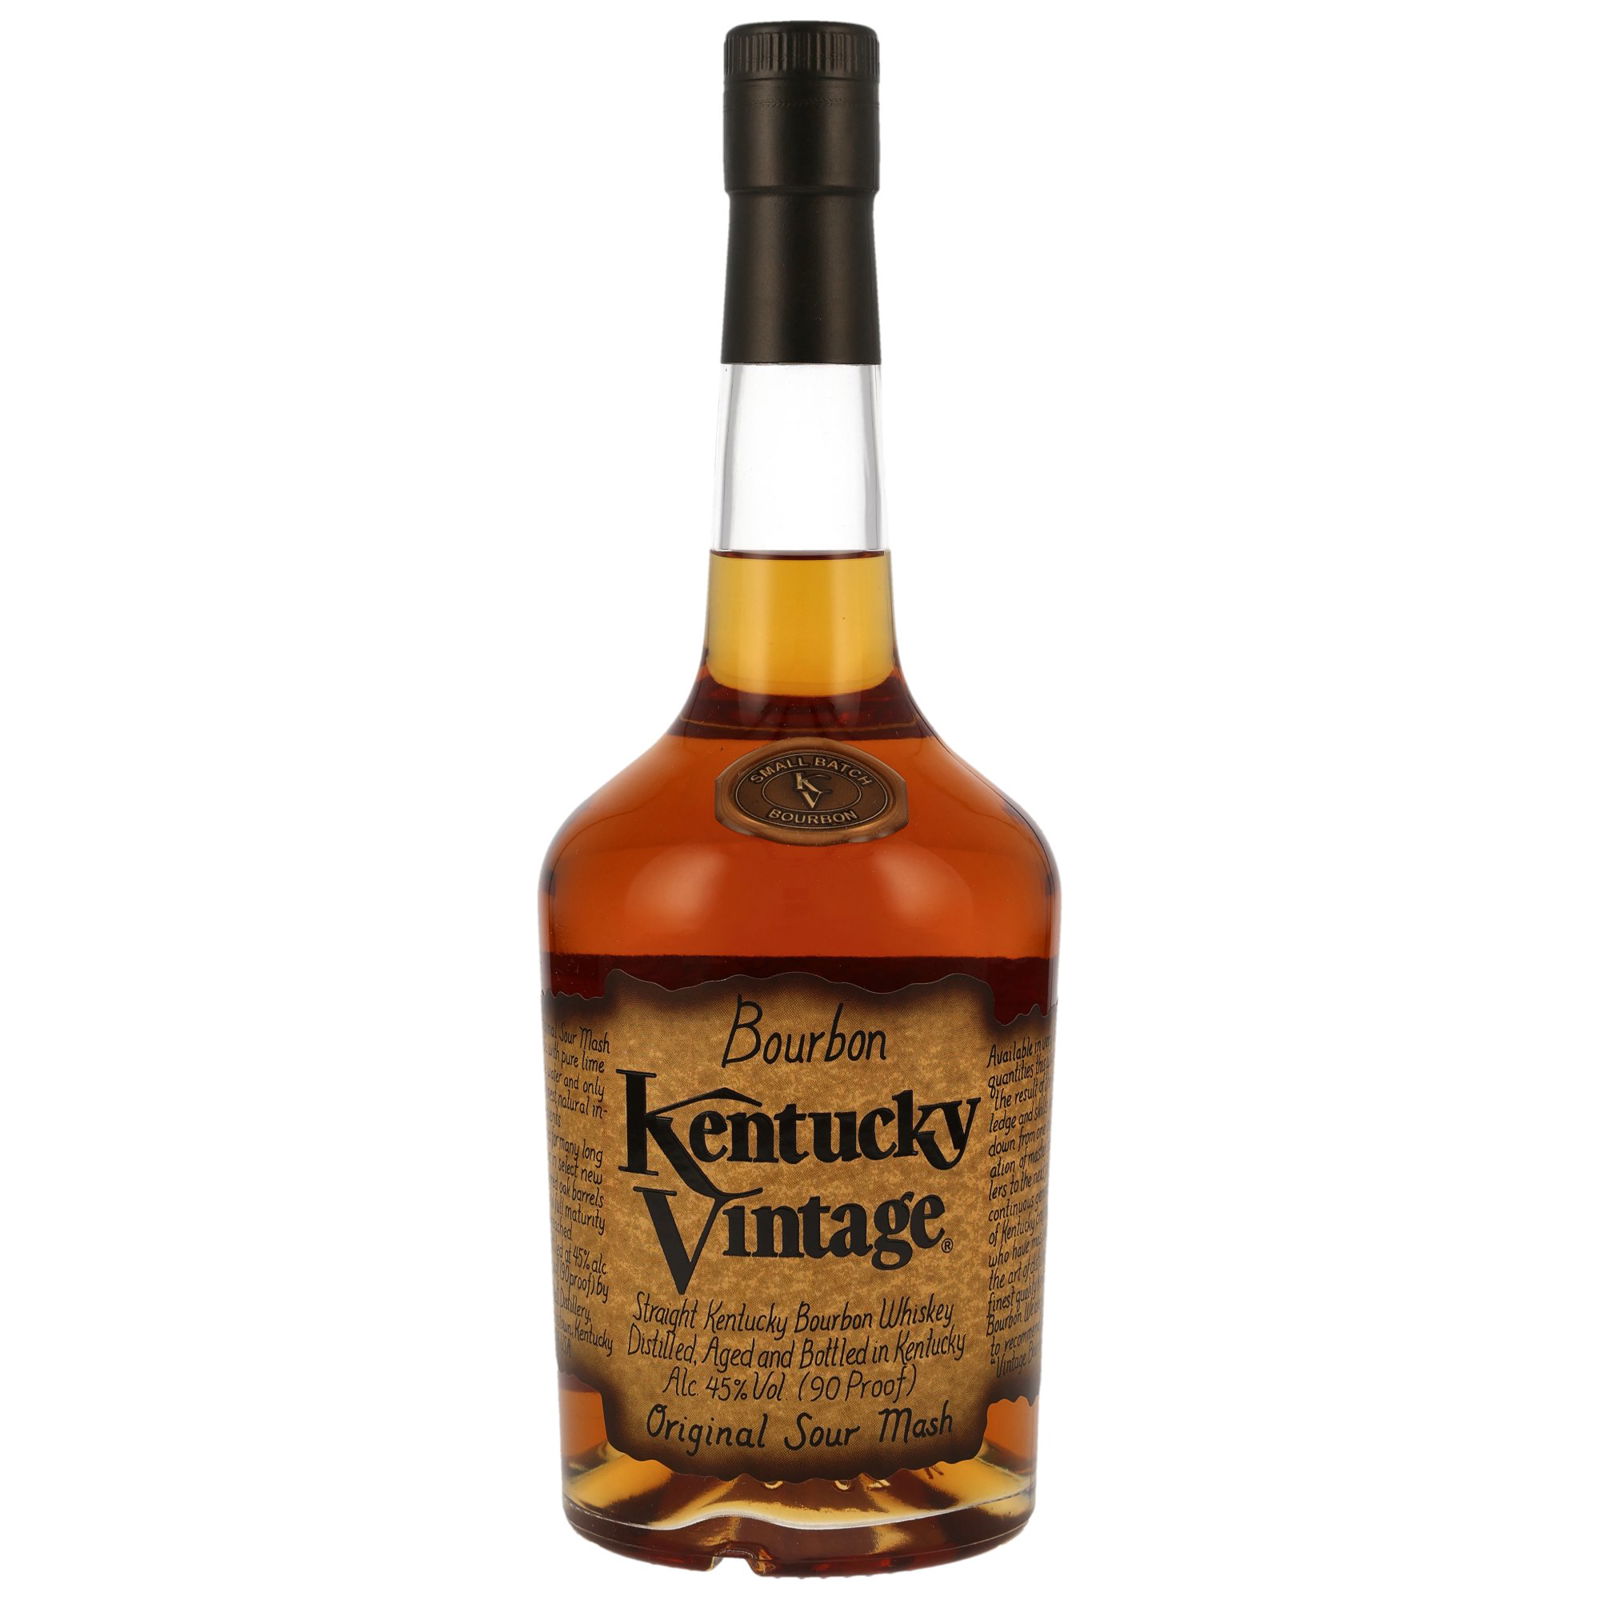 Willett Kentucky Vintage Bourbon Original Sour Mash